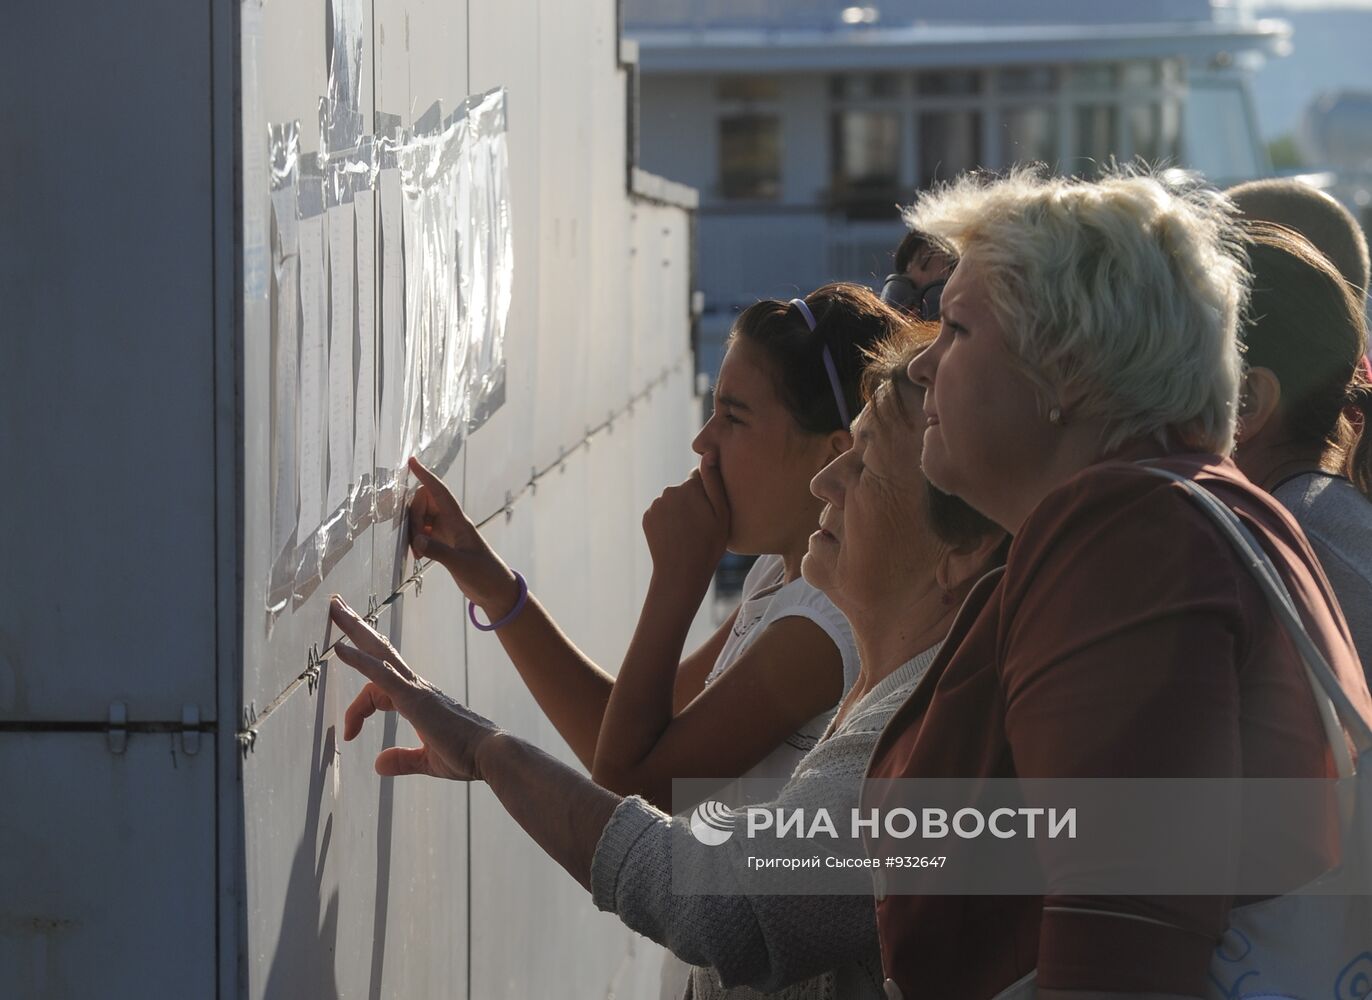 МЧС опубликовало список жертв в крушении теплохода "Булгария"